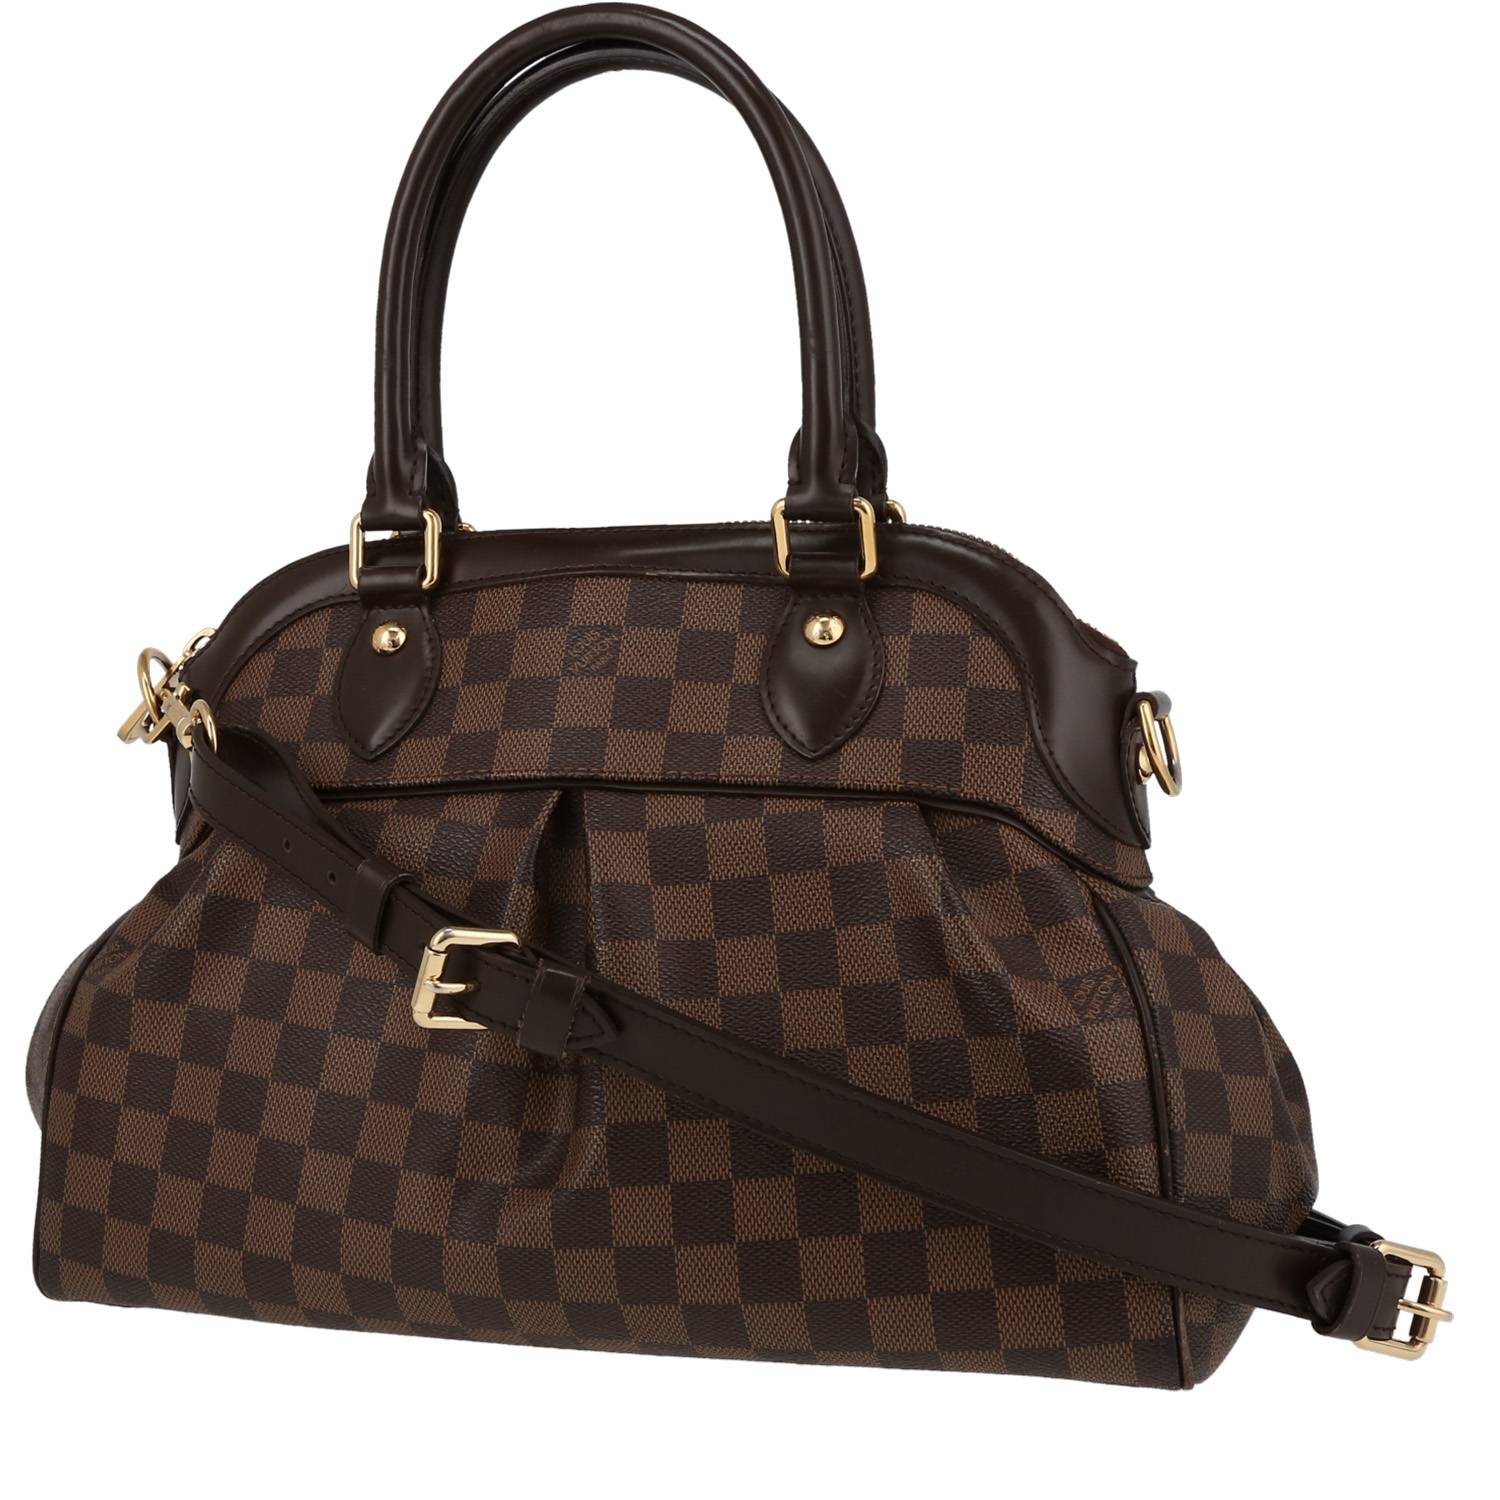 Louis Vuitton Trevi Handbag in Ebene Damier Canvas and Brown